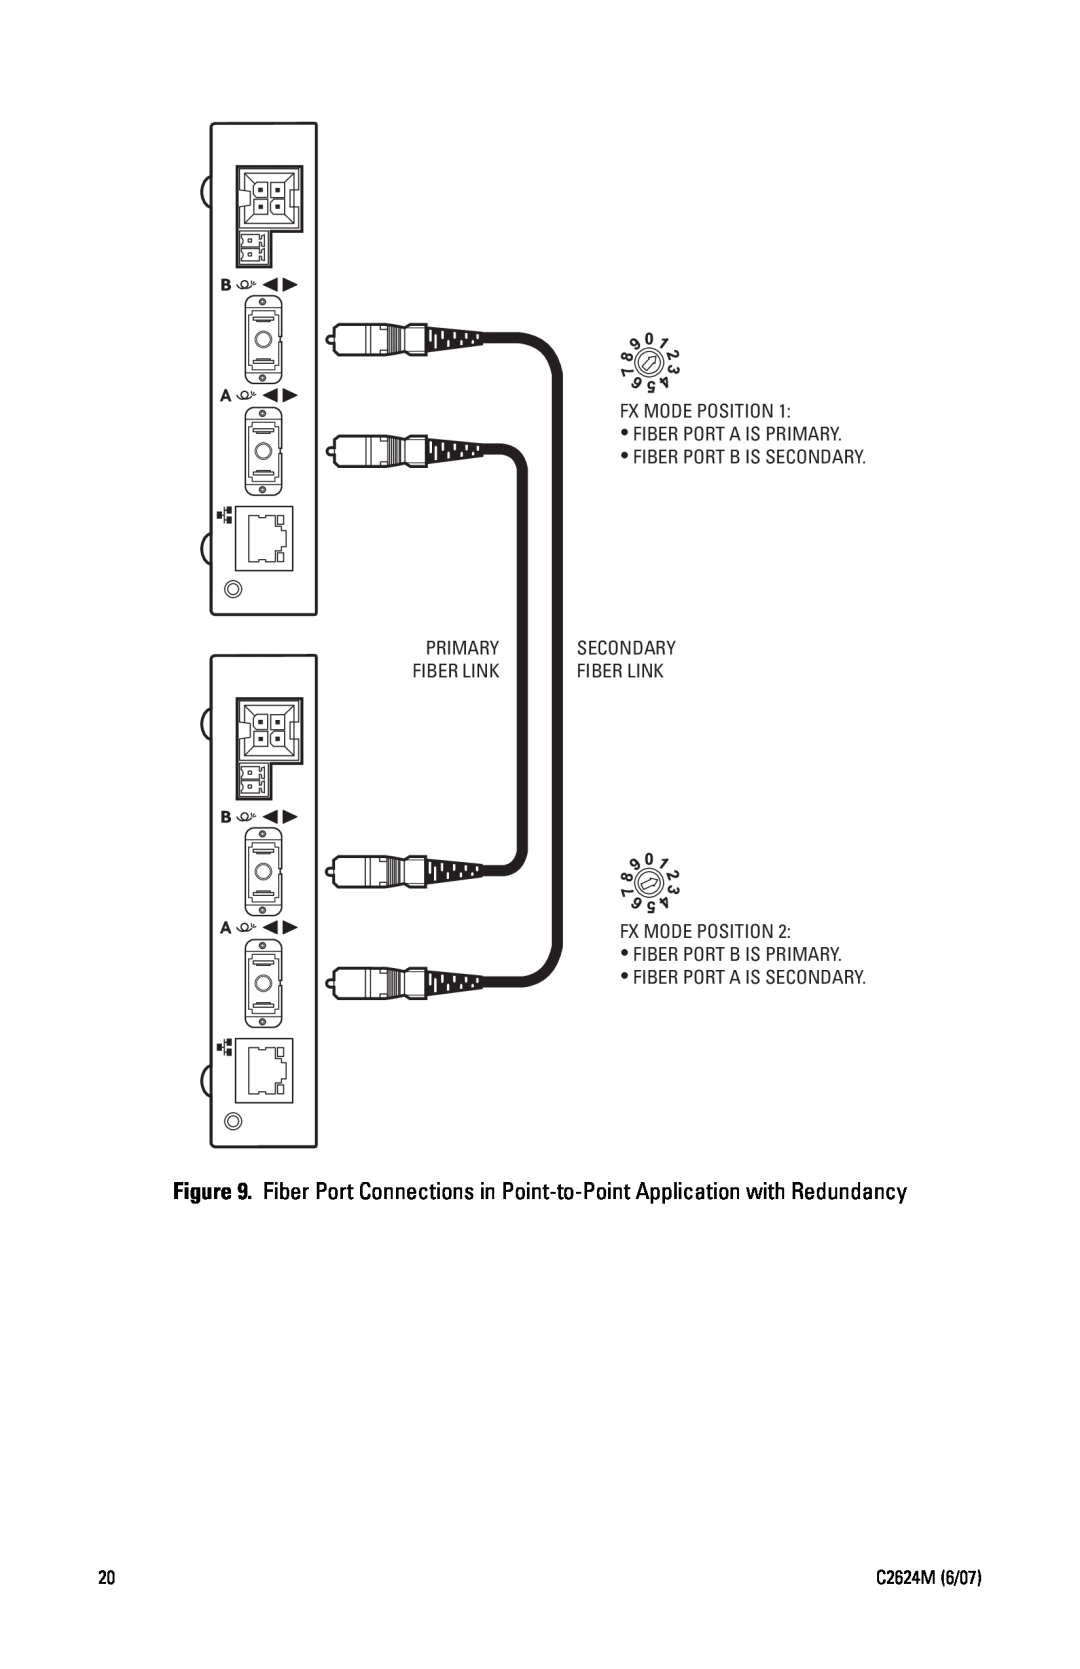 Pelco FX82012 manual Fx Mode Position Fiber Port A Is Primary Fiber Port B Is Secondary 